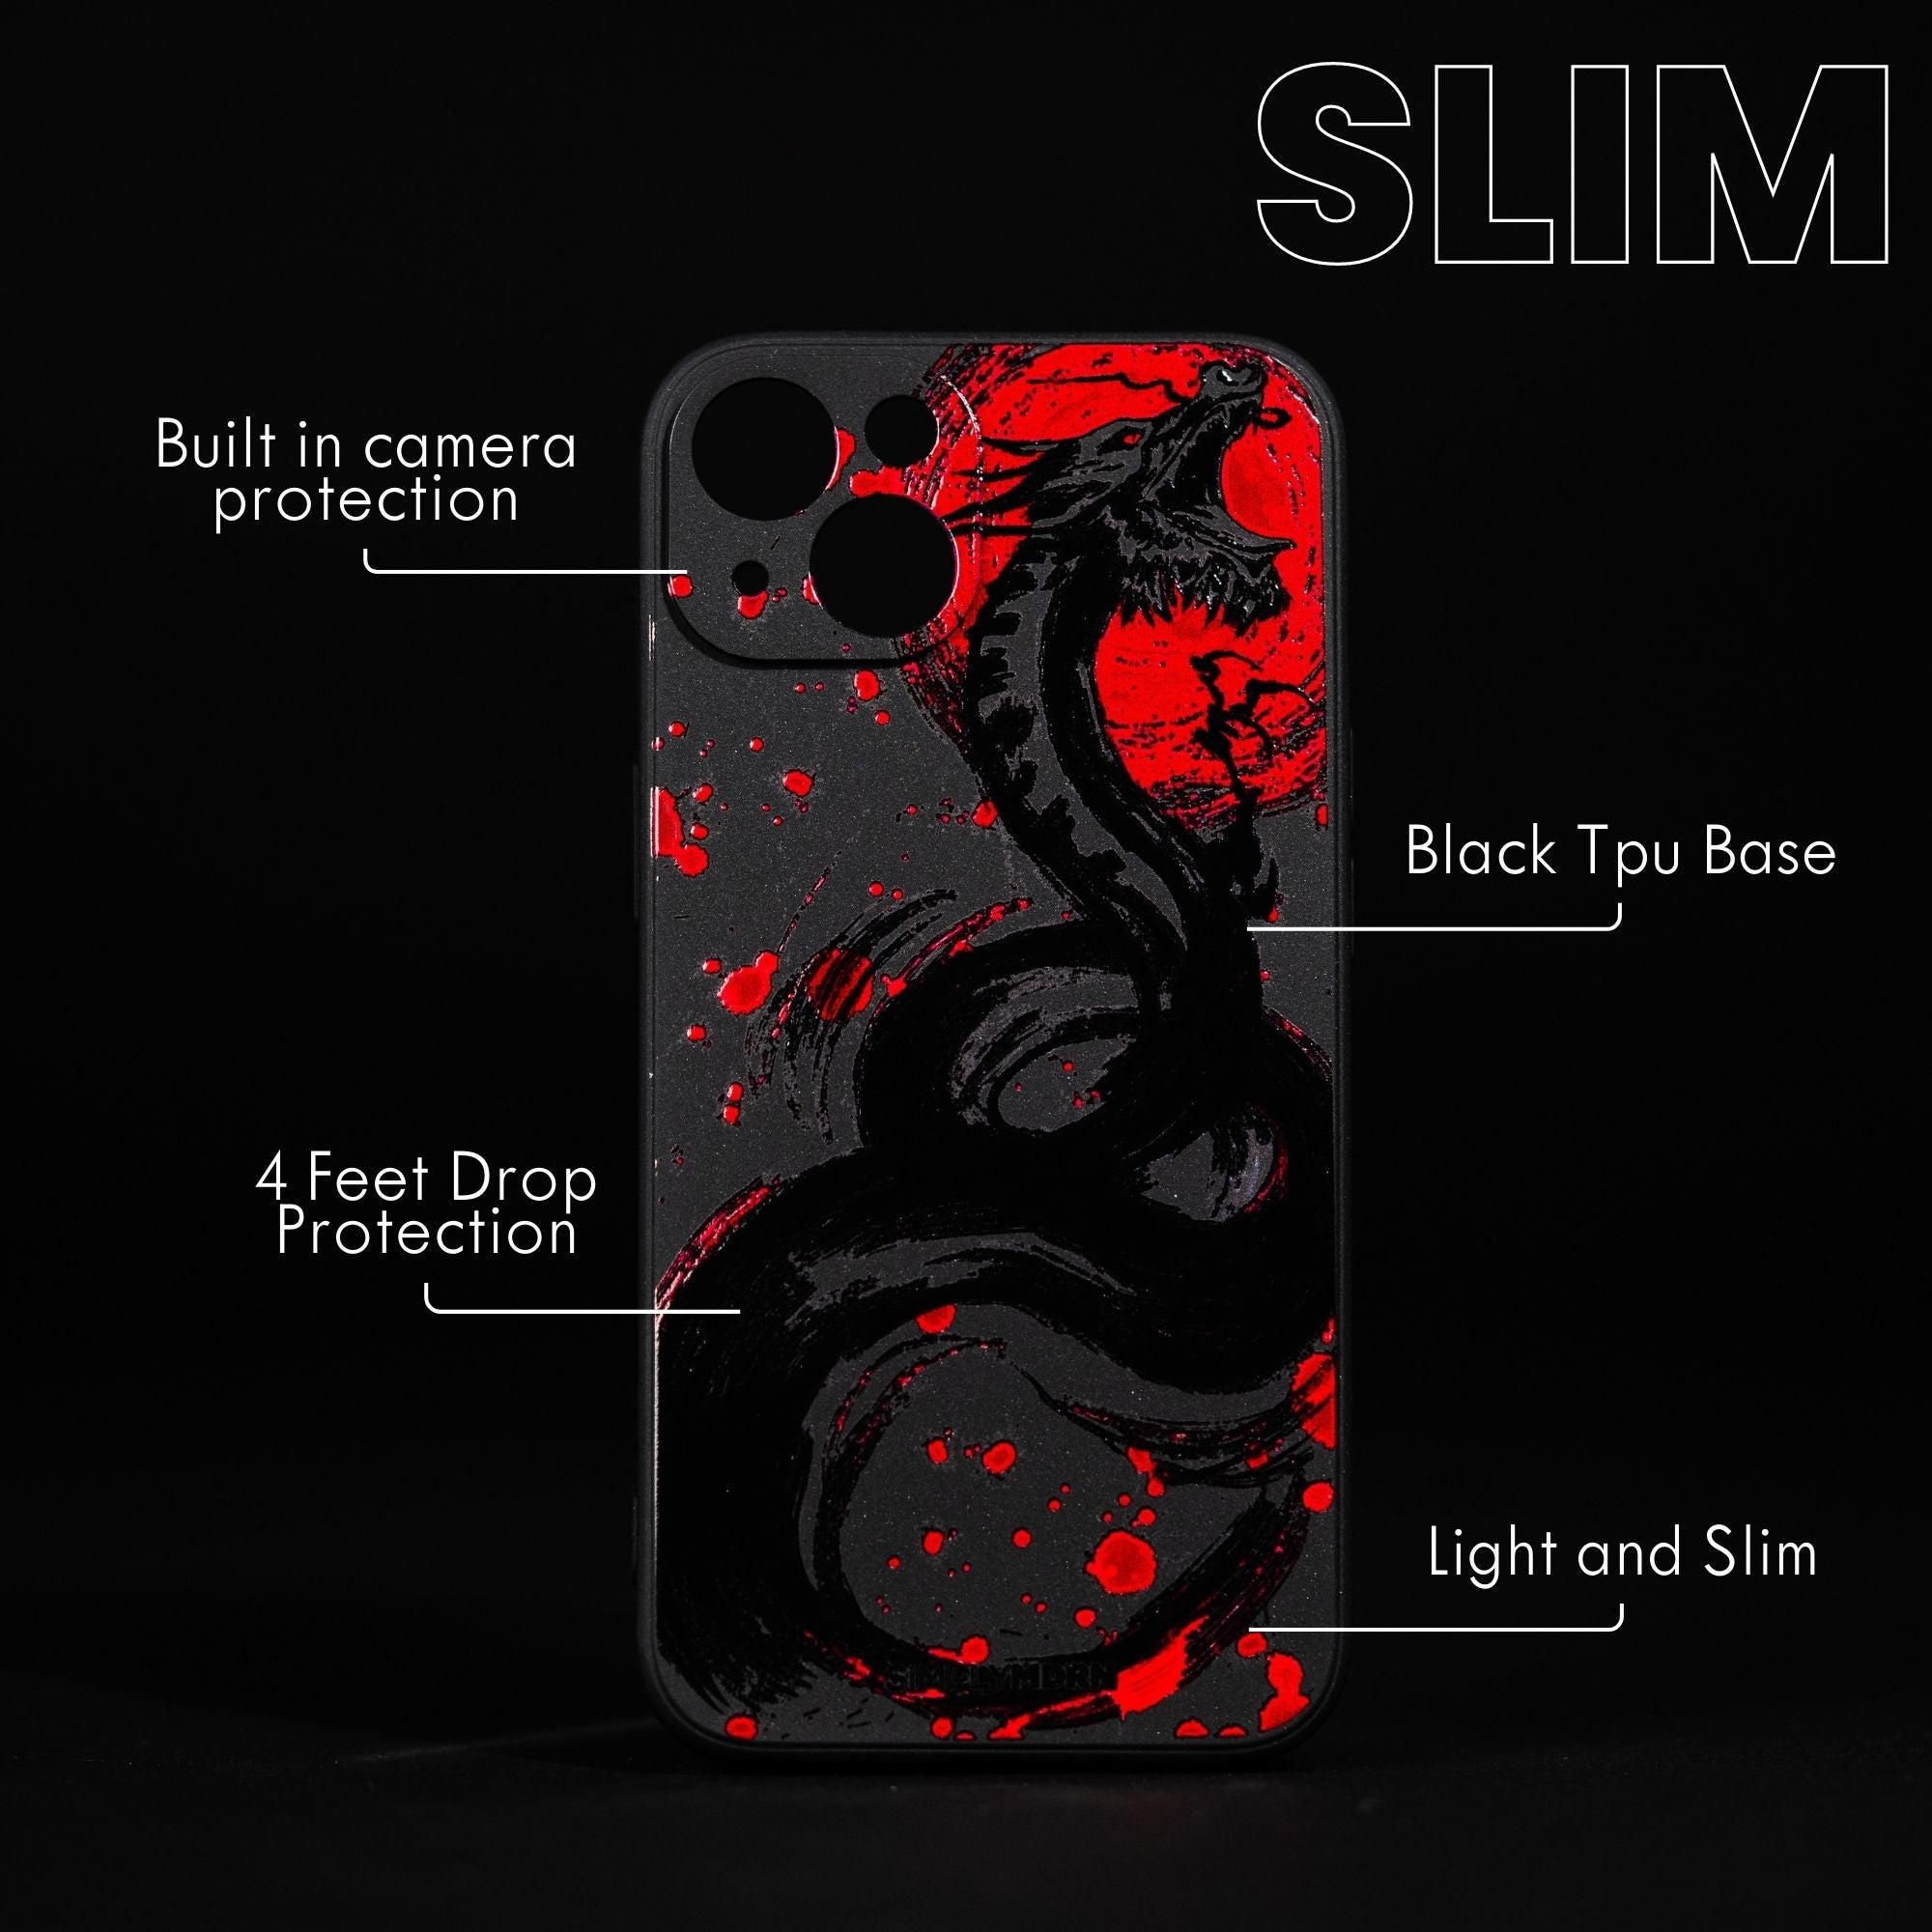 DRAGON X1 Slim iphone case